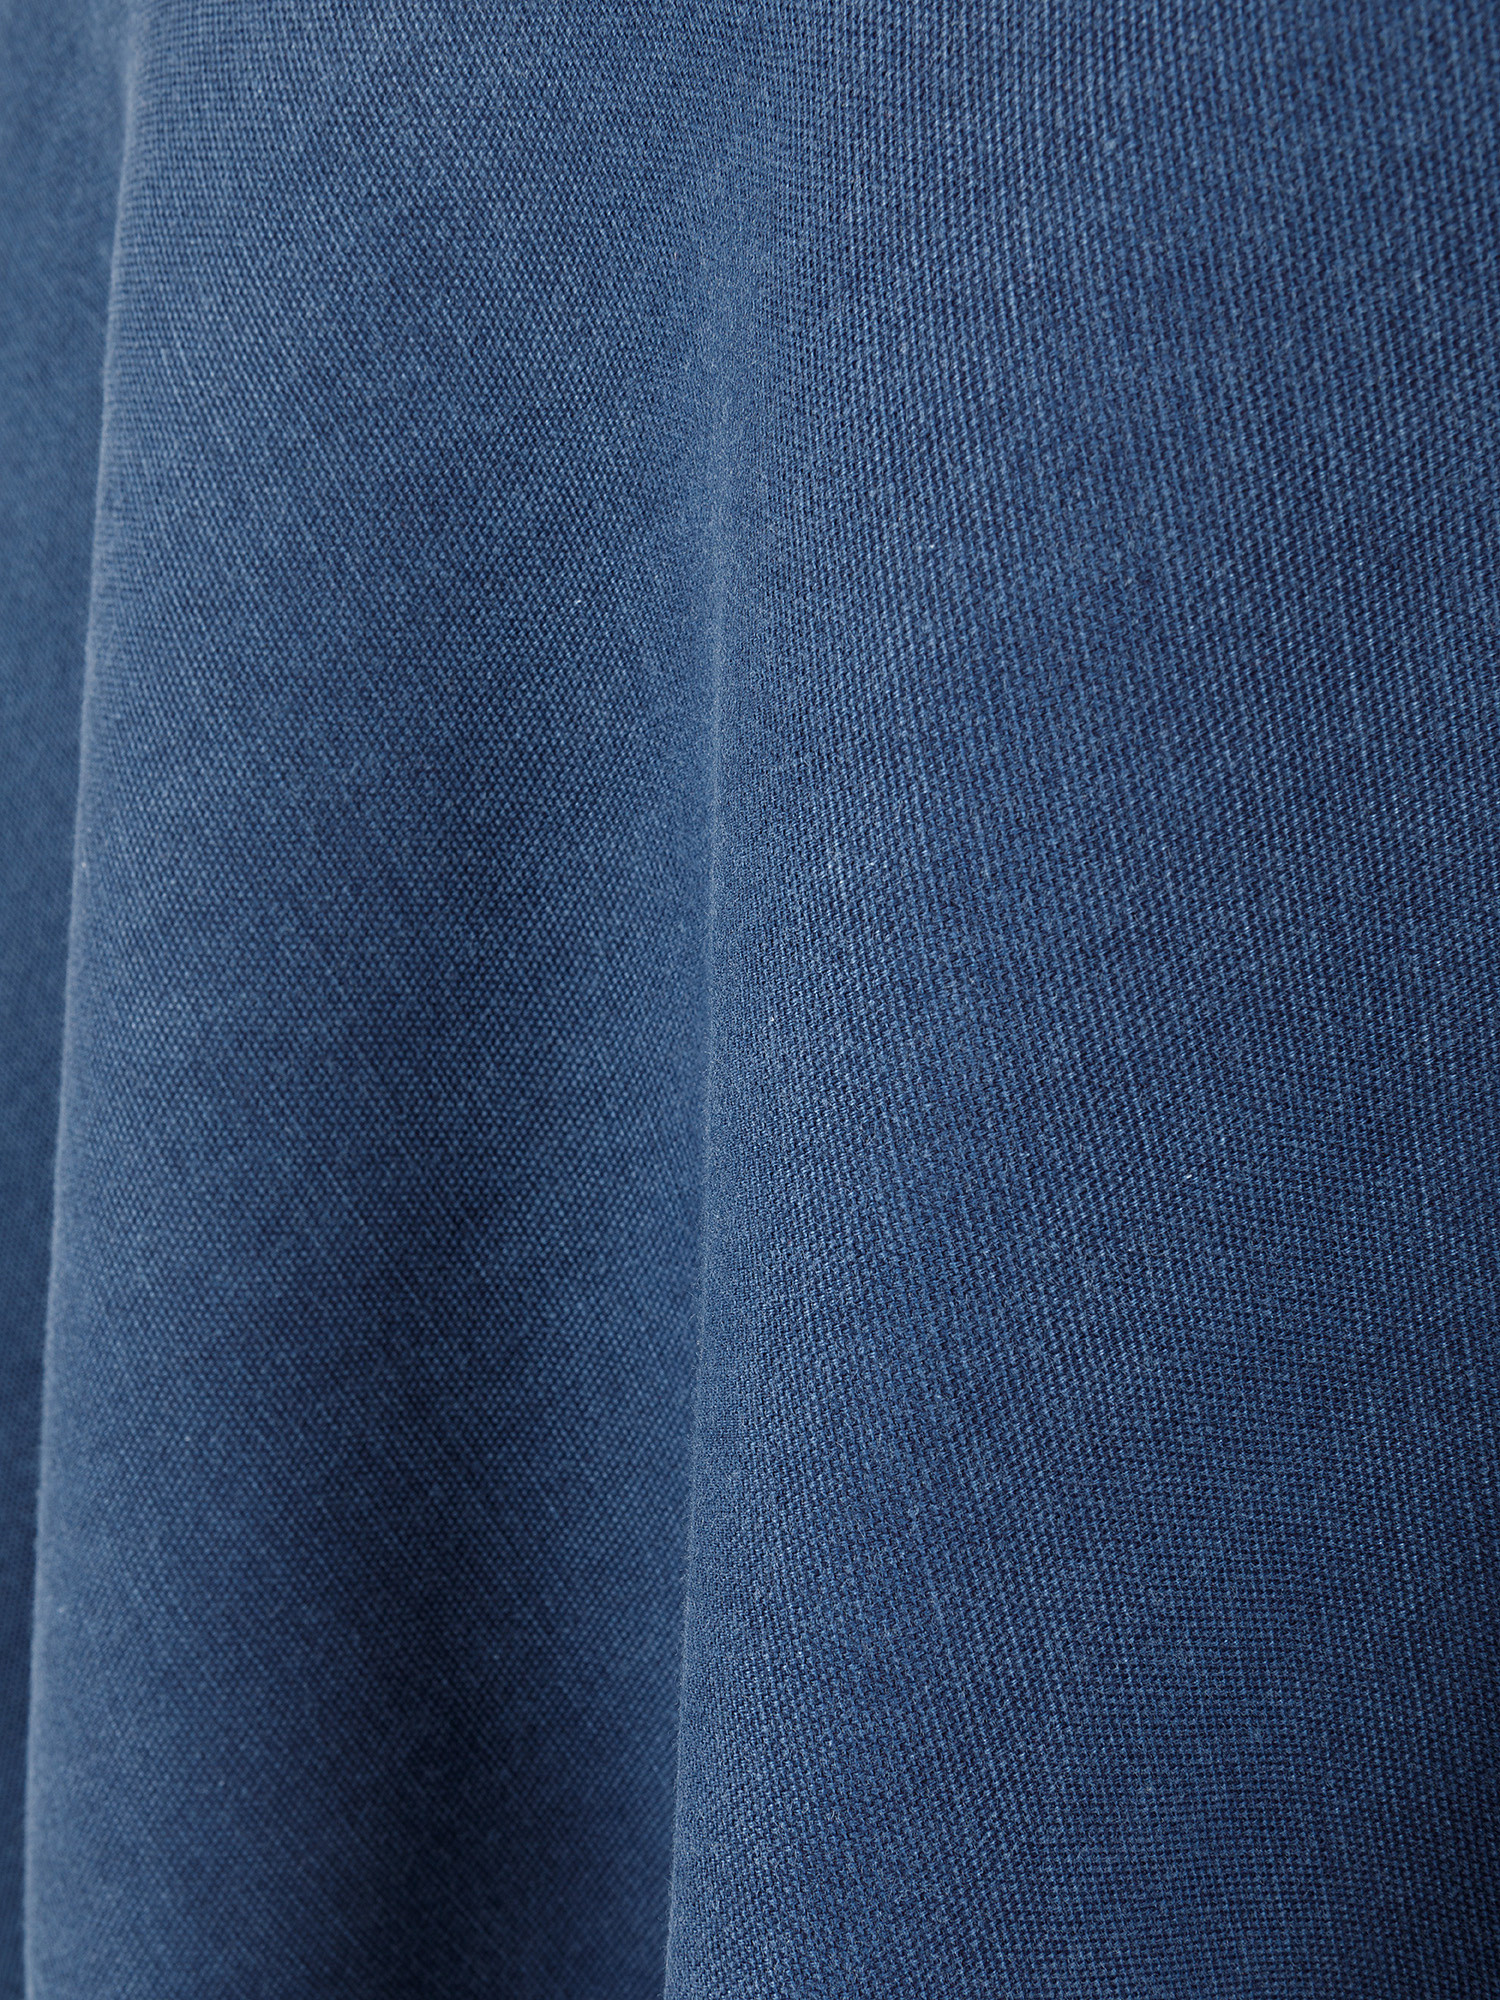 Tovaglia ovale in cotone lavato tinta unita, Blu, large image number 1